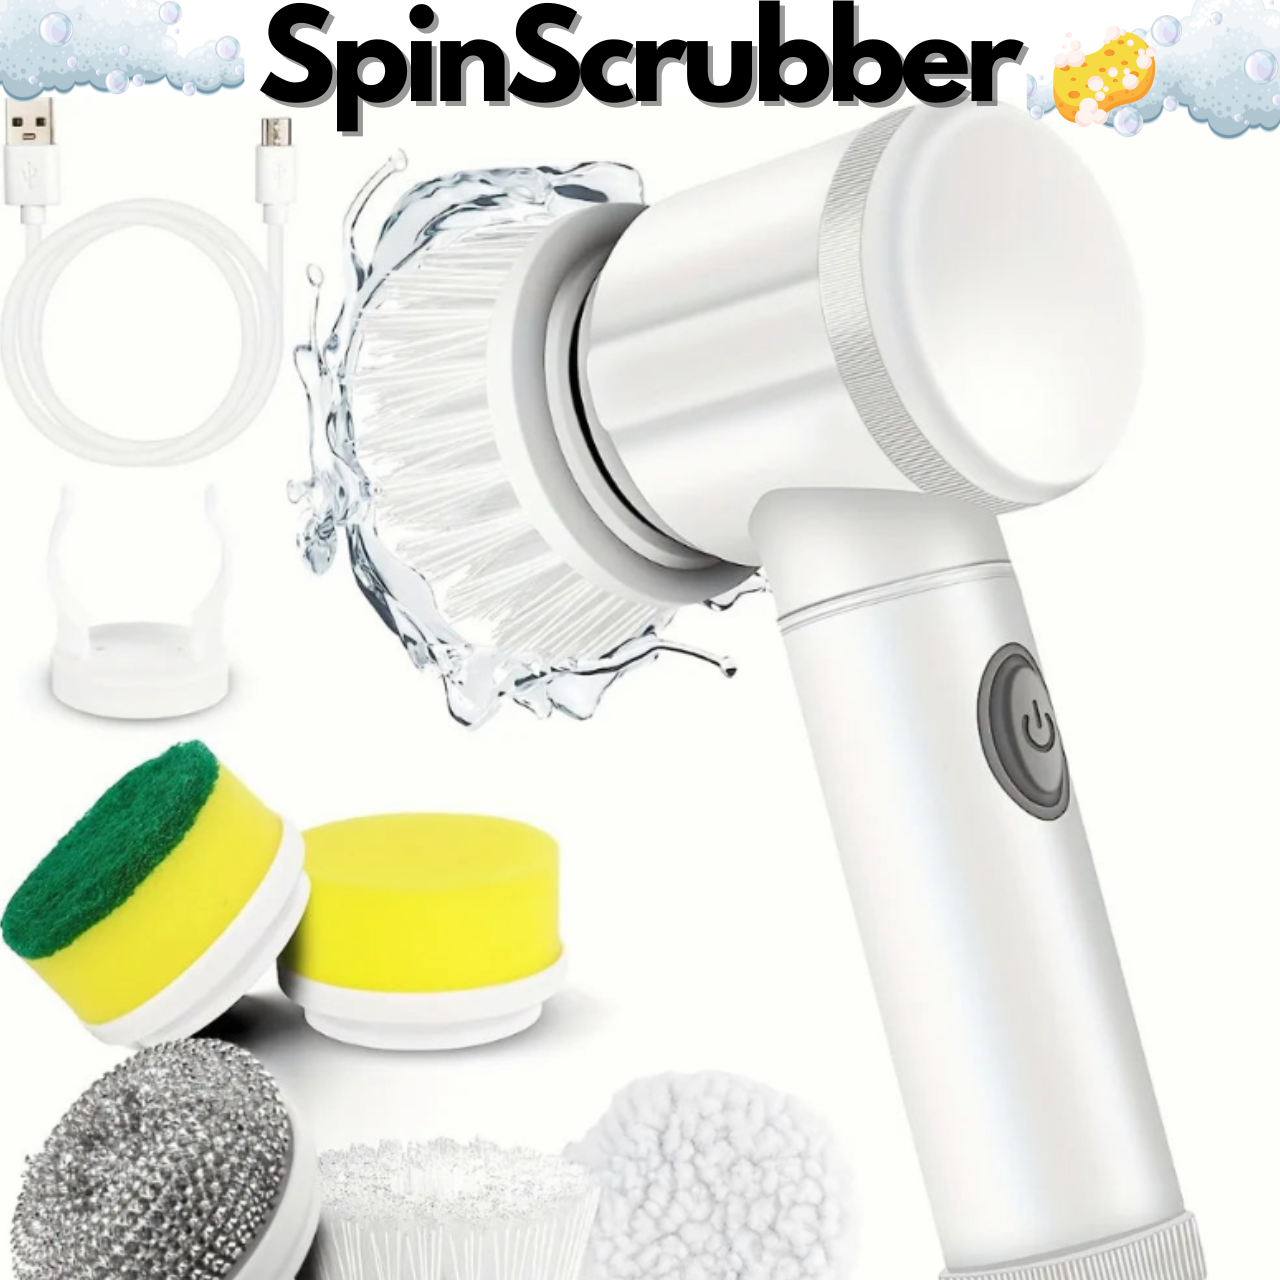 SpinScrubber